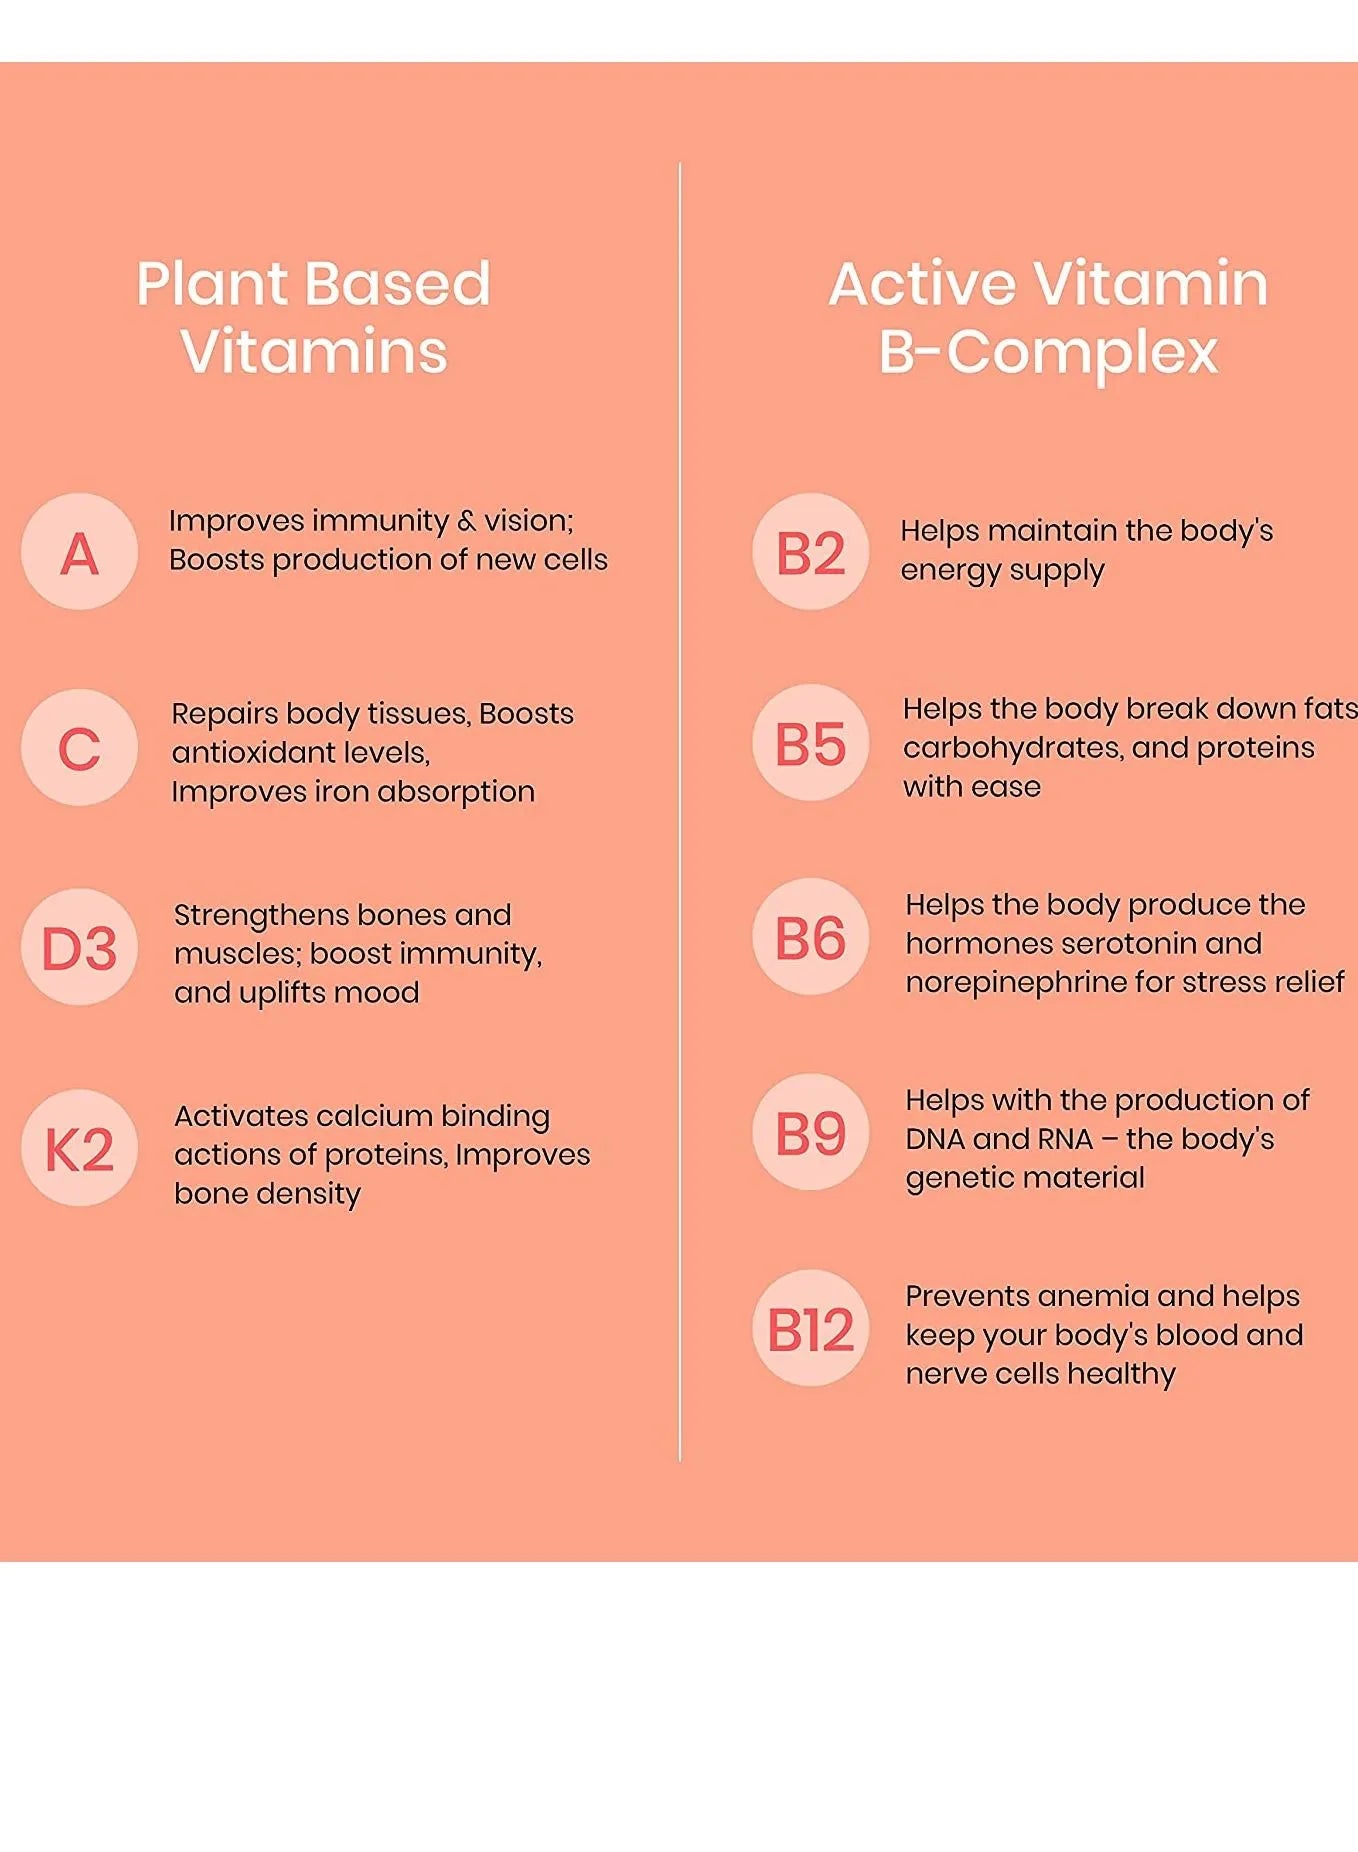 Melts Multi Vitamin Plant Based Multivitamin 30 Oral Strips, Buy 2 Get 1 Free